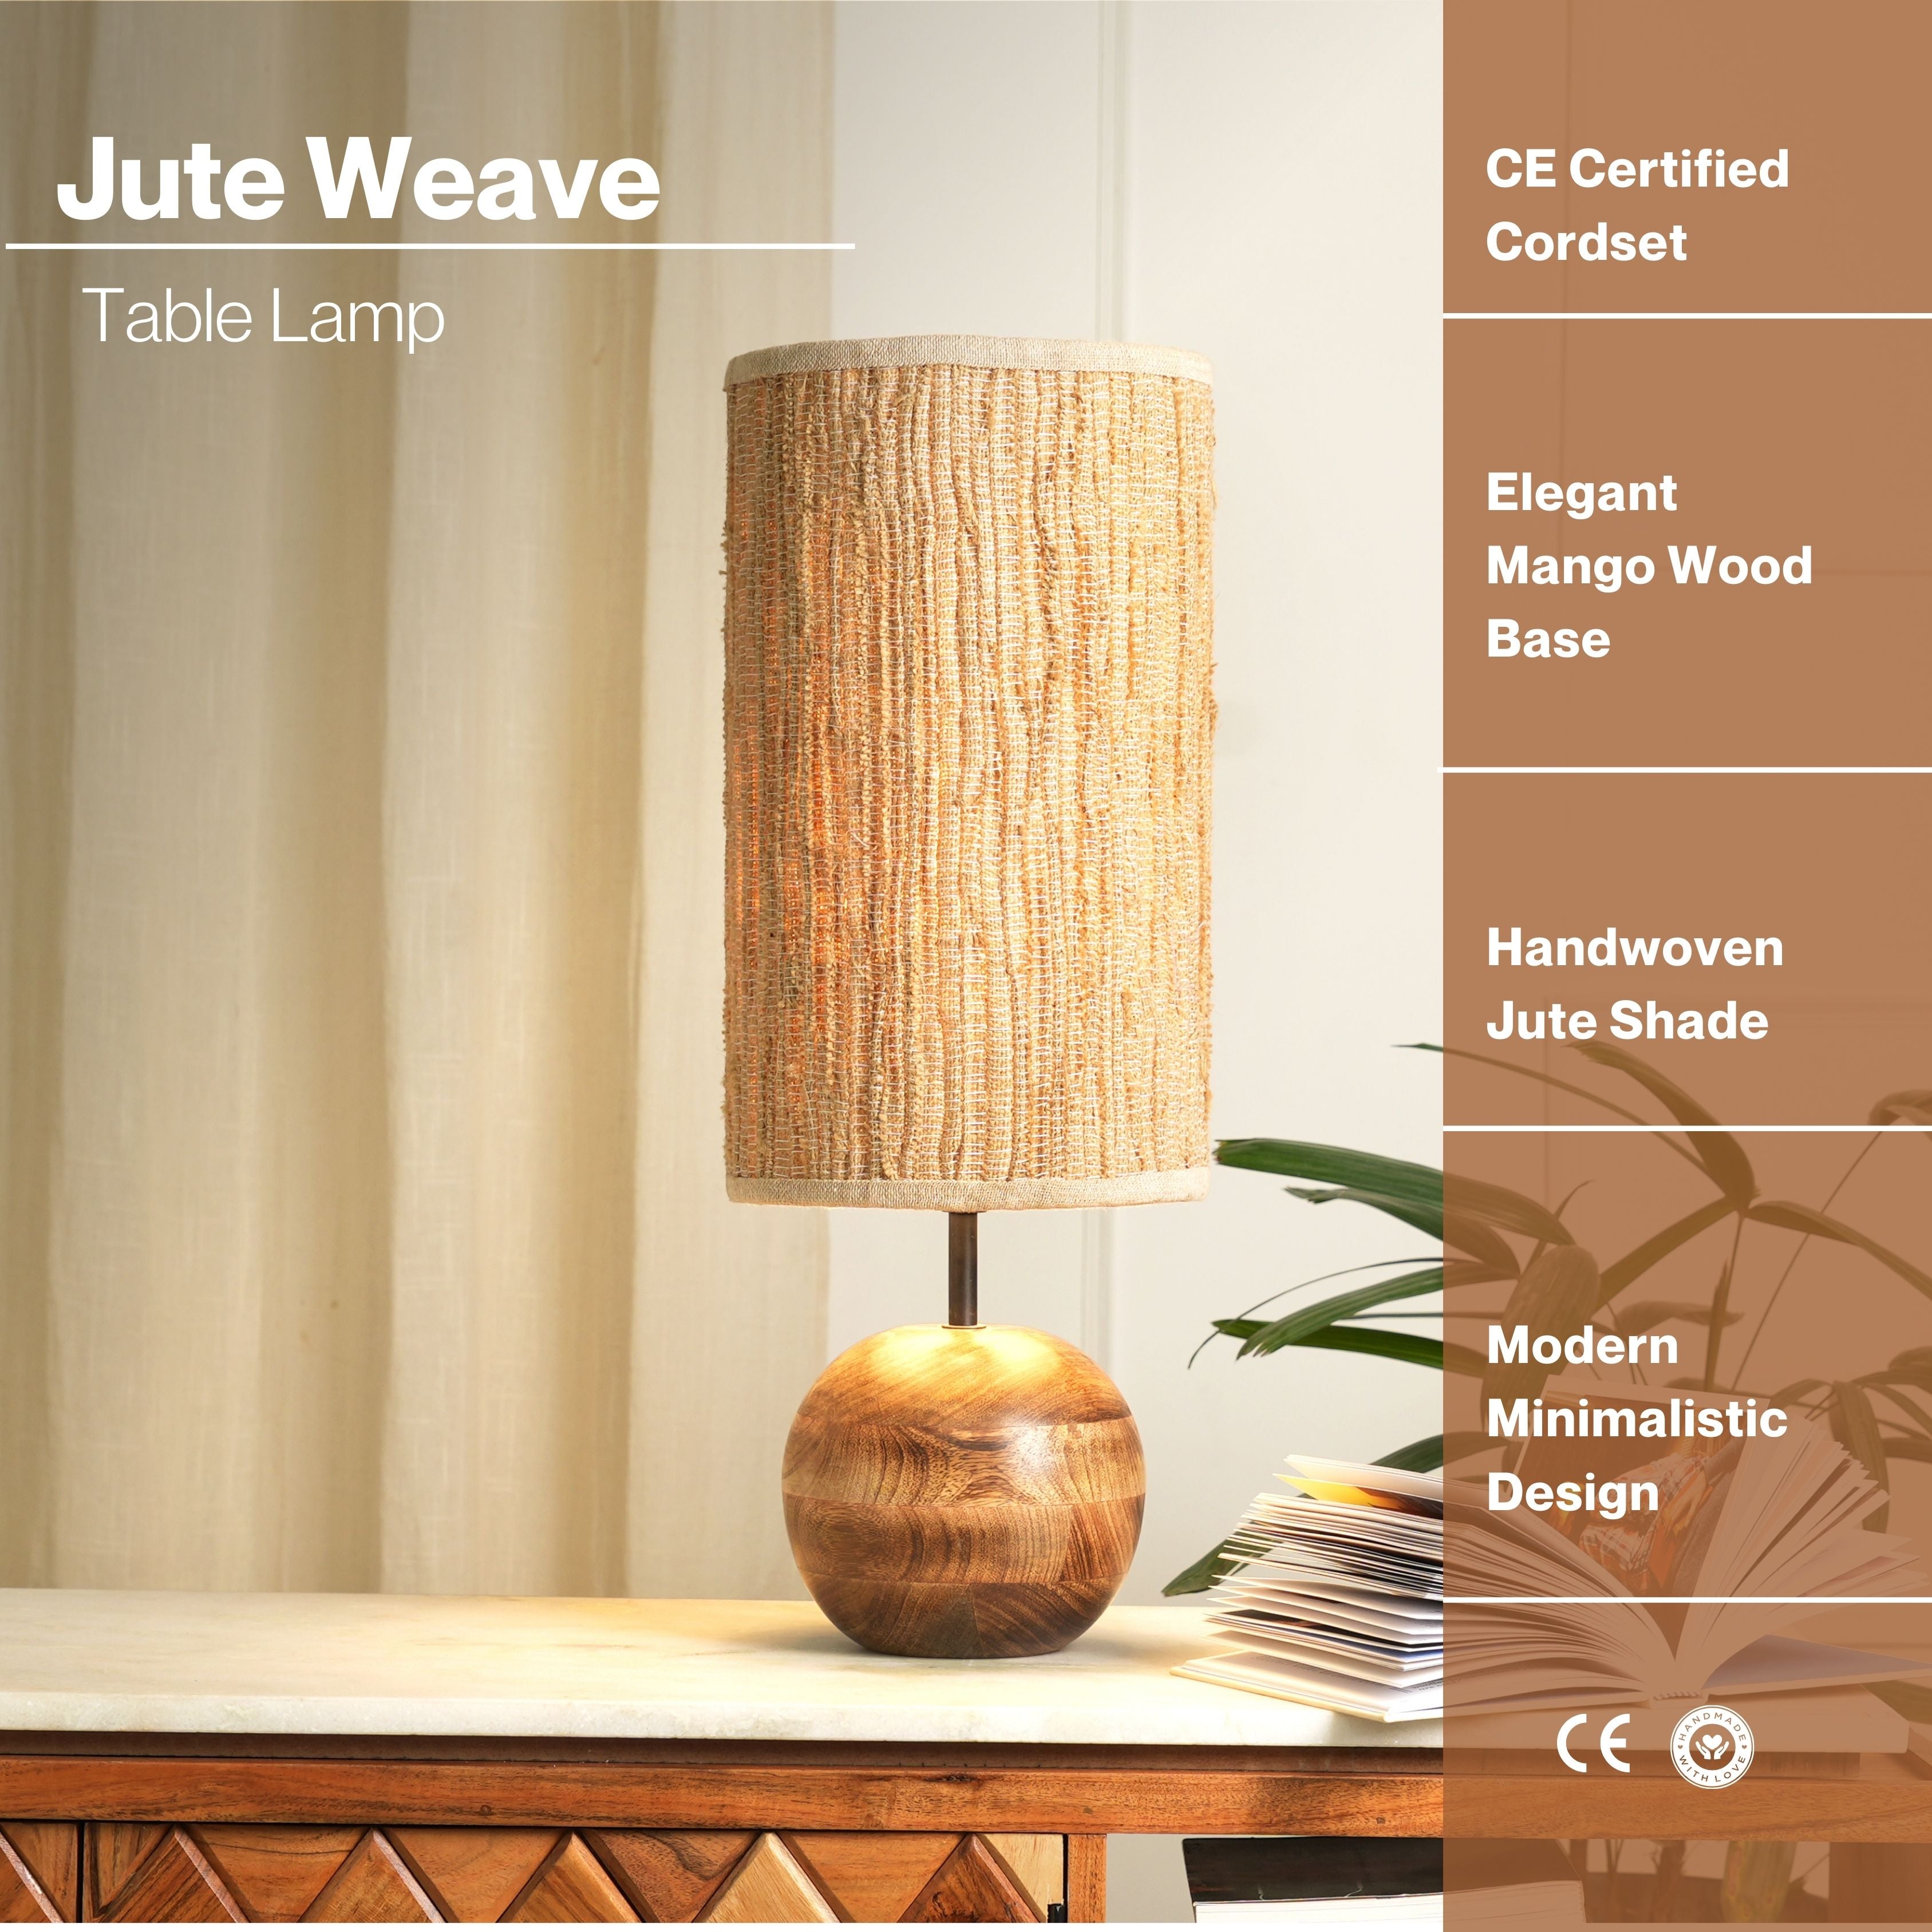 JUTE WEAVE TABLE LAMP - JUTE WEAVE NATURAL DESK LAMP, MANGO WOOD BASE, HANDCRAFTED BEDSIDE LAMPSHADE